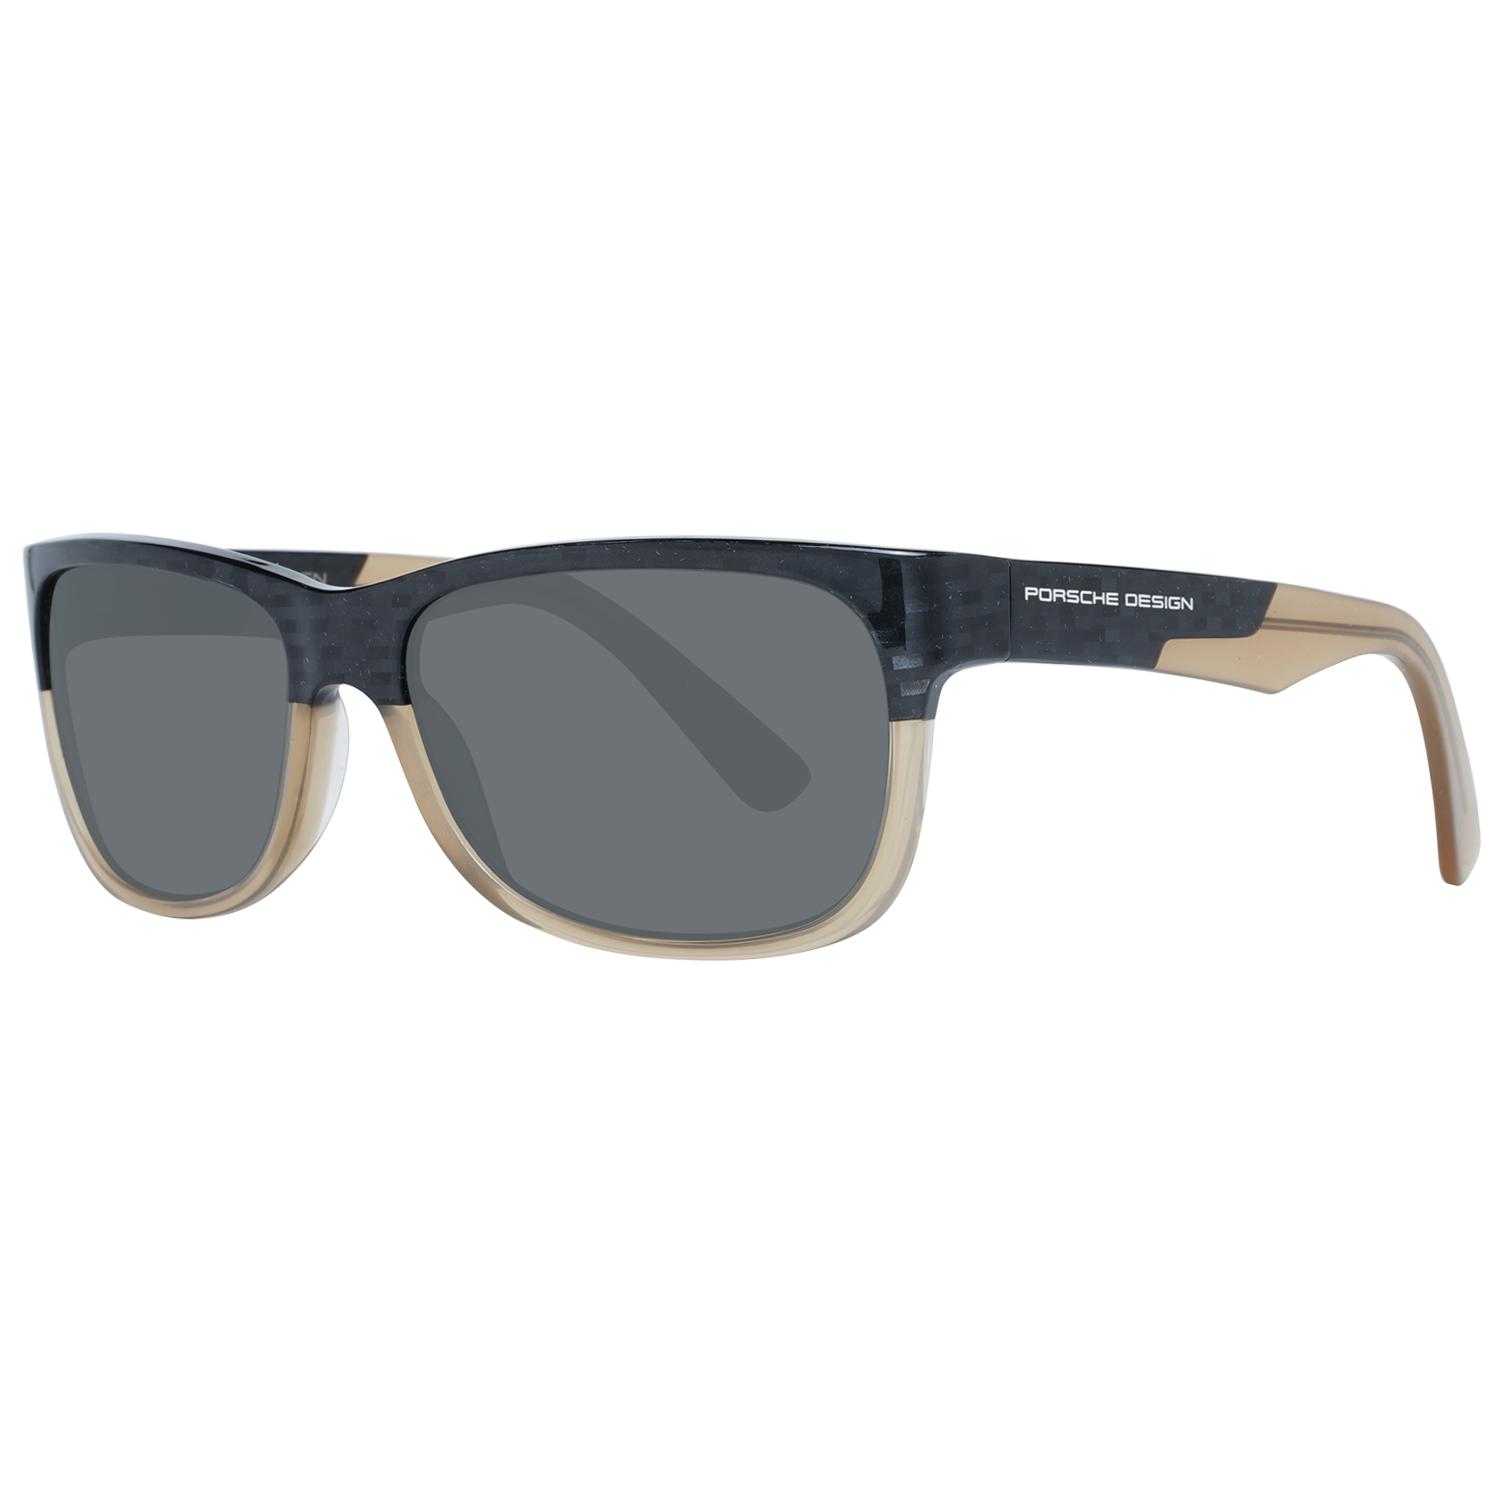 Porsche Design Sunglasses Porsche Design Sunglasses P8546 D 58 Eyeglasses Eyewear UK USA Australia 